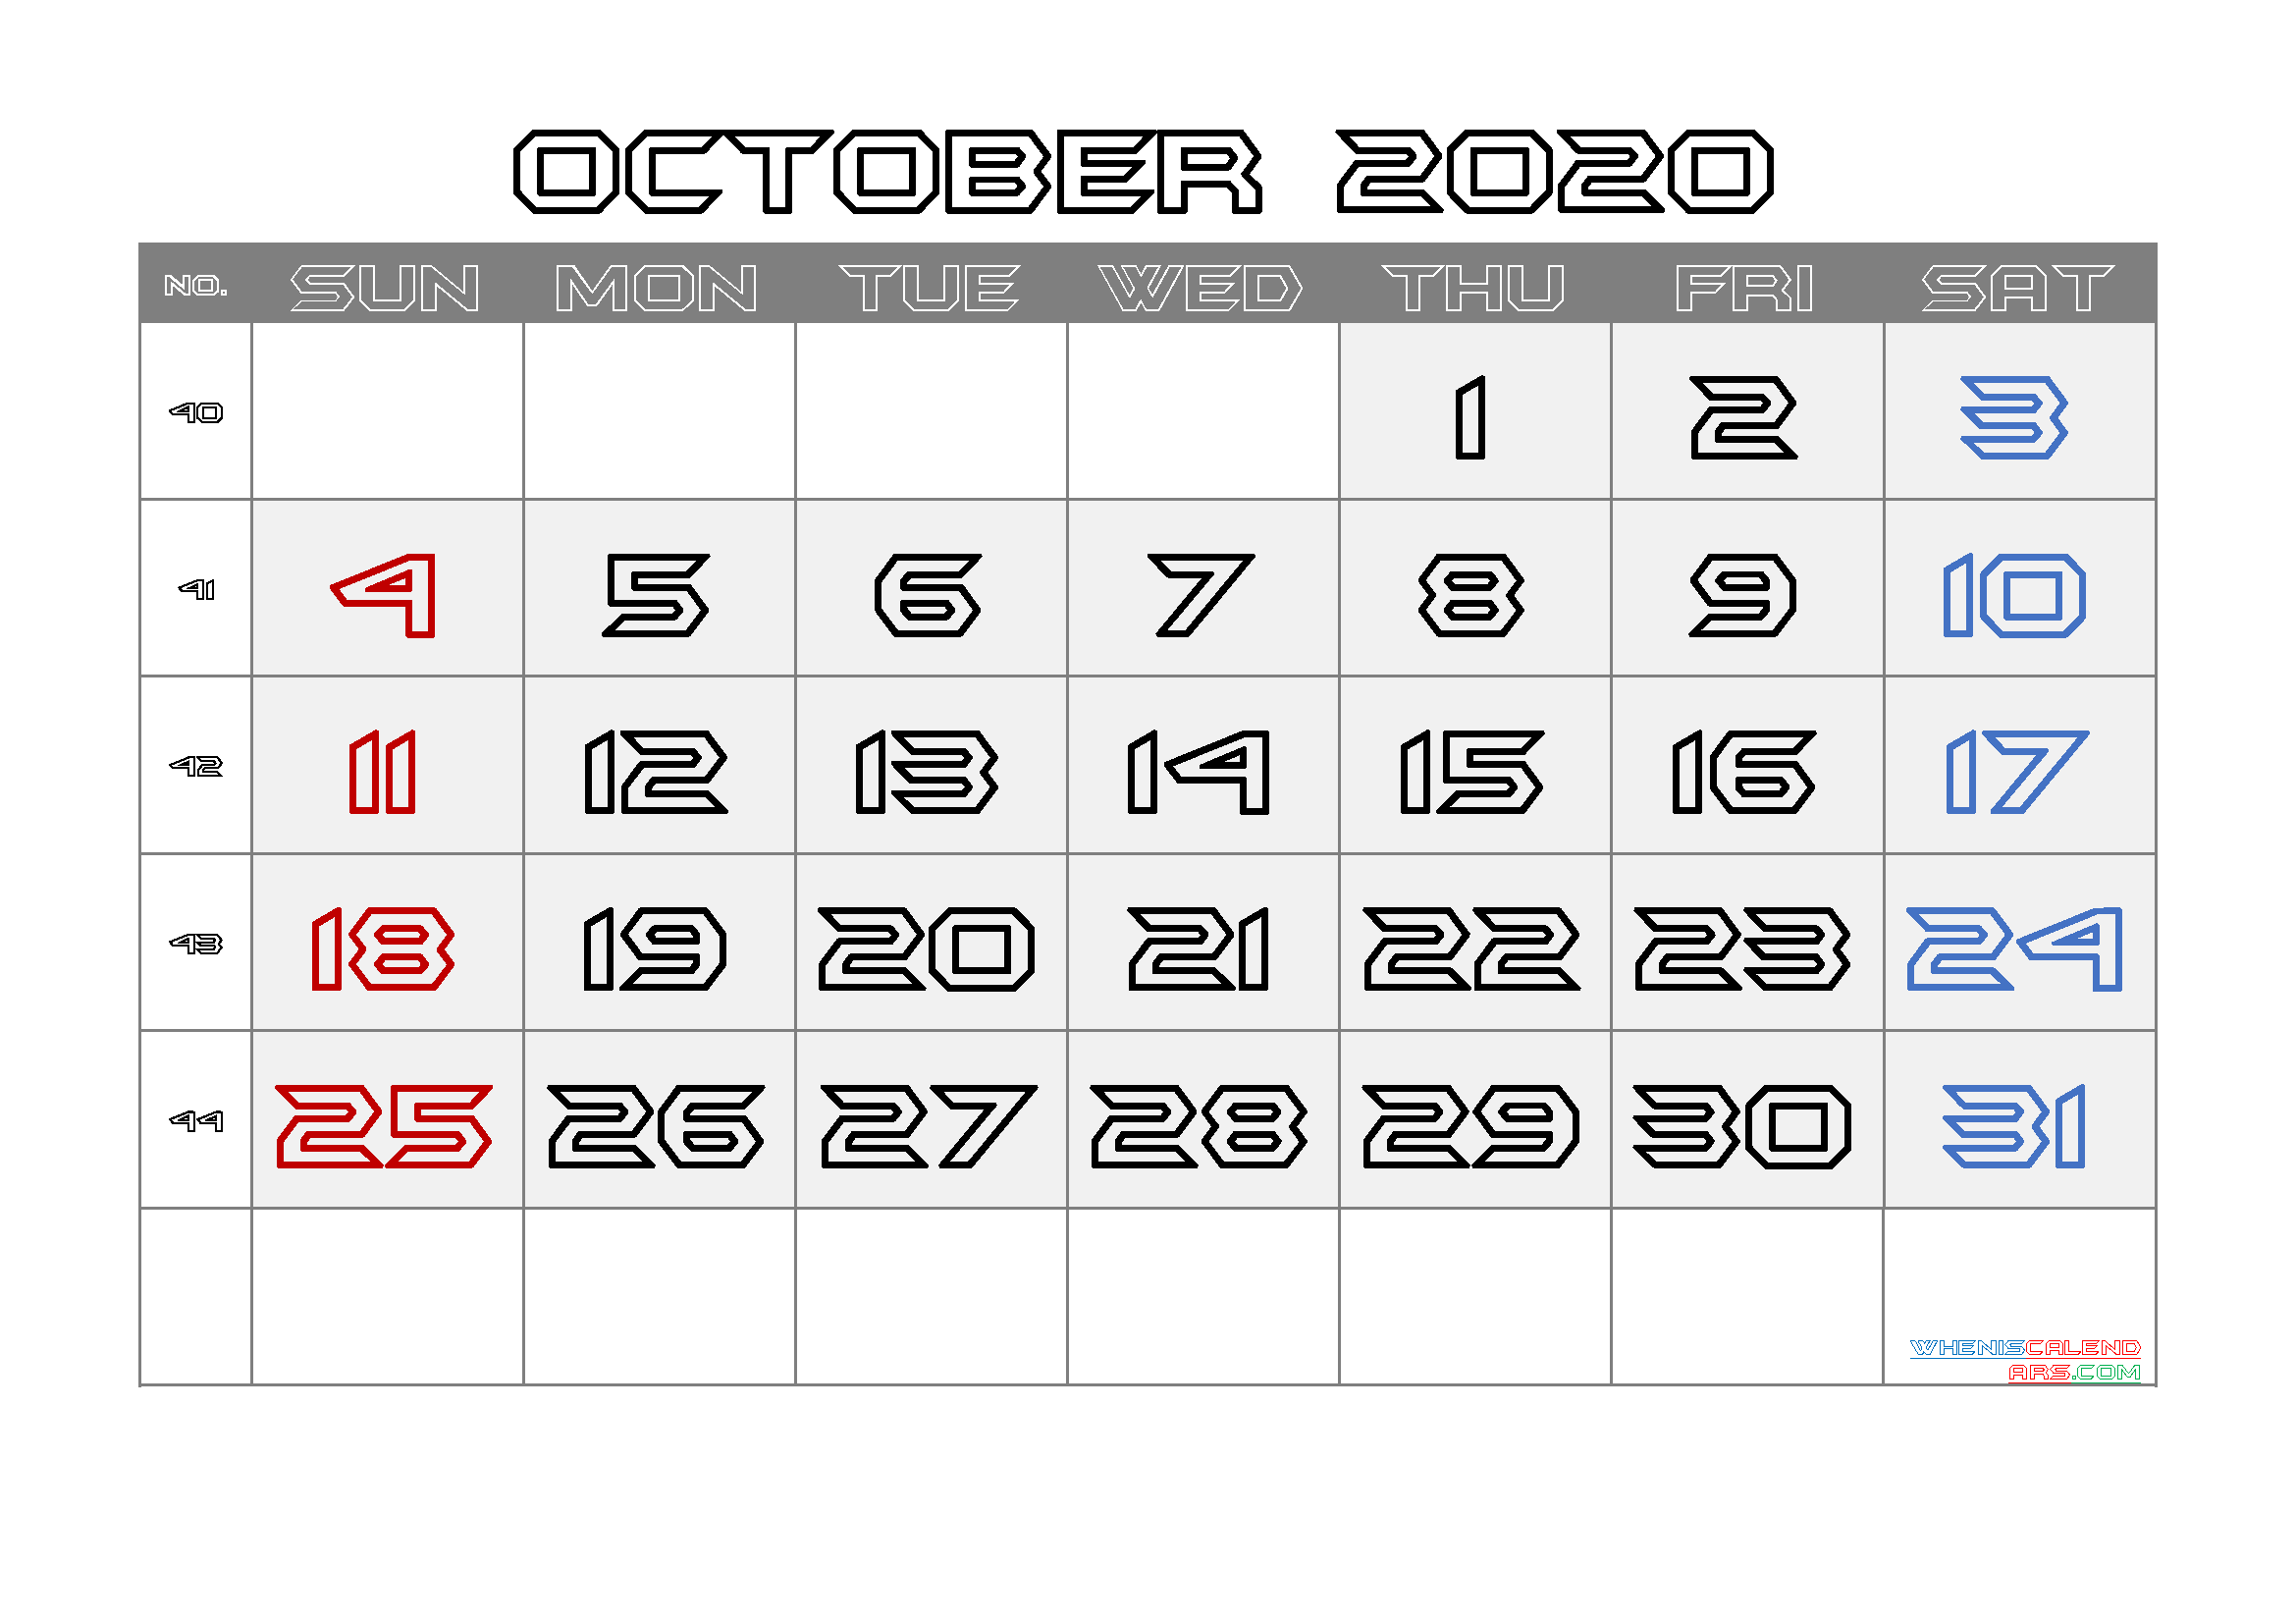 Calendar October 2020 Free Printable